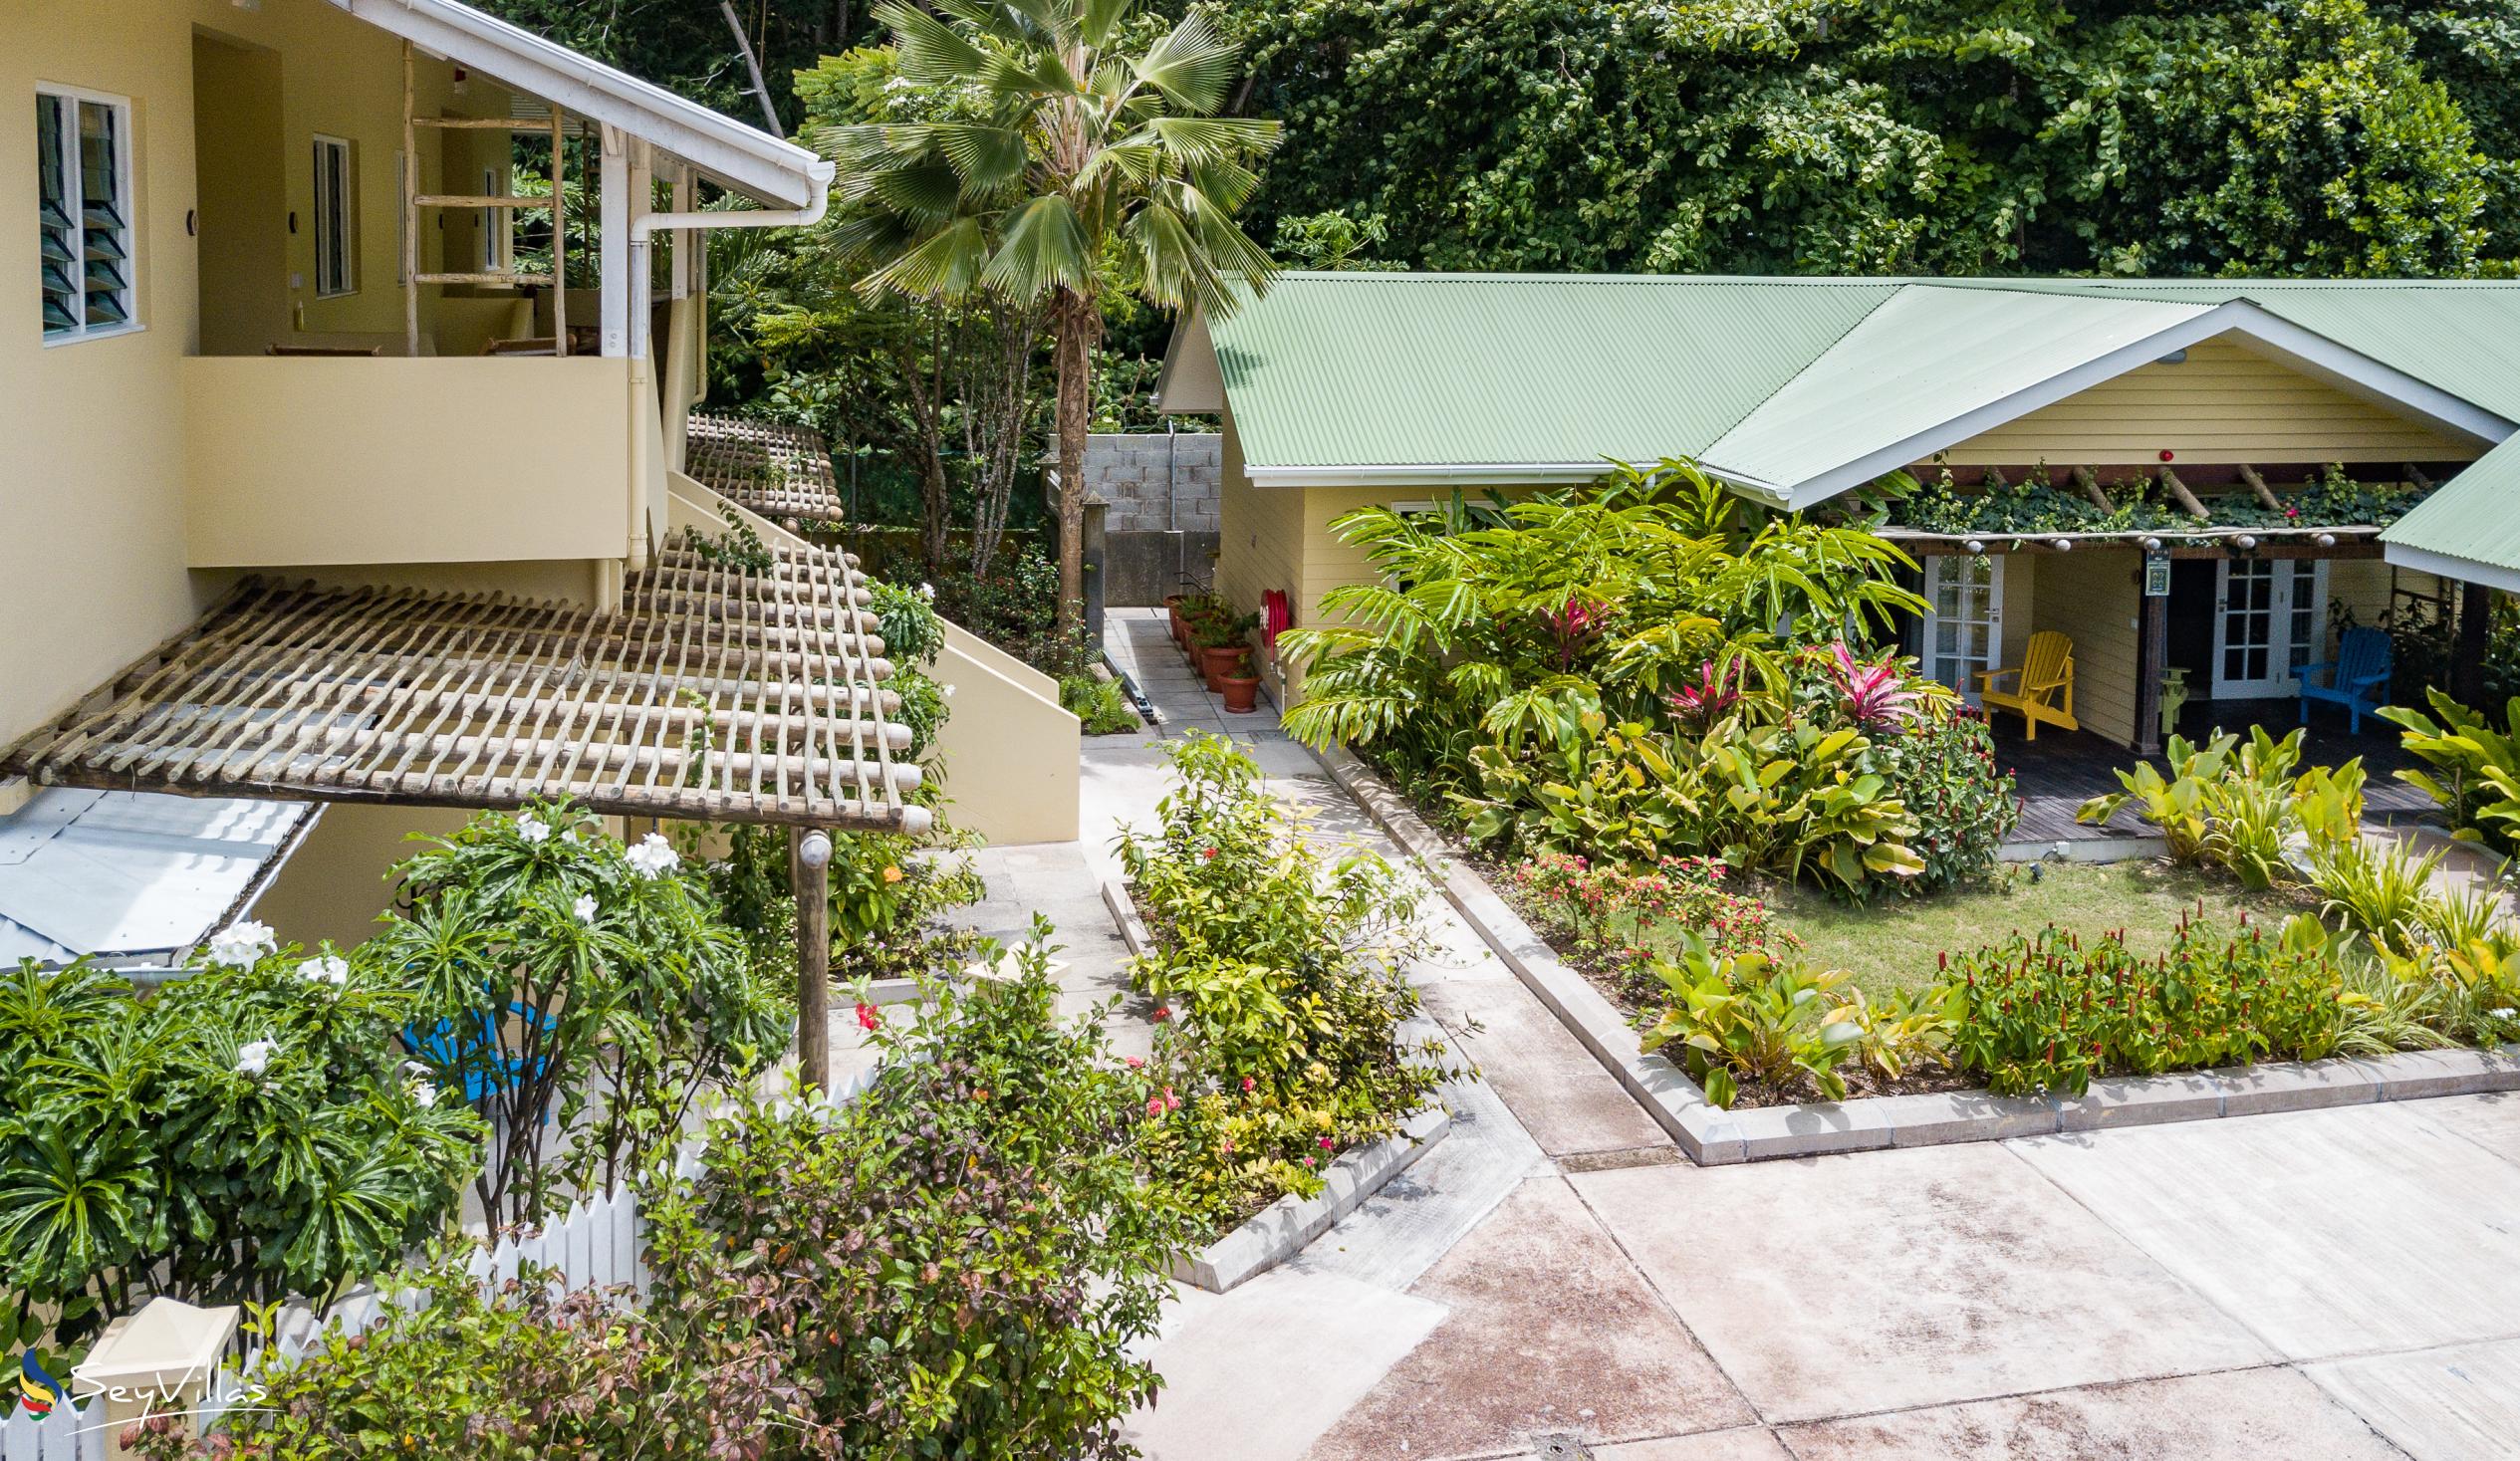 Photo 22: Residence Praslinoise - Outdoor area - Praslin (Seychelles)